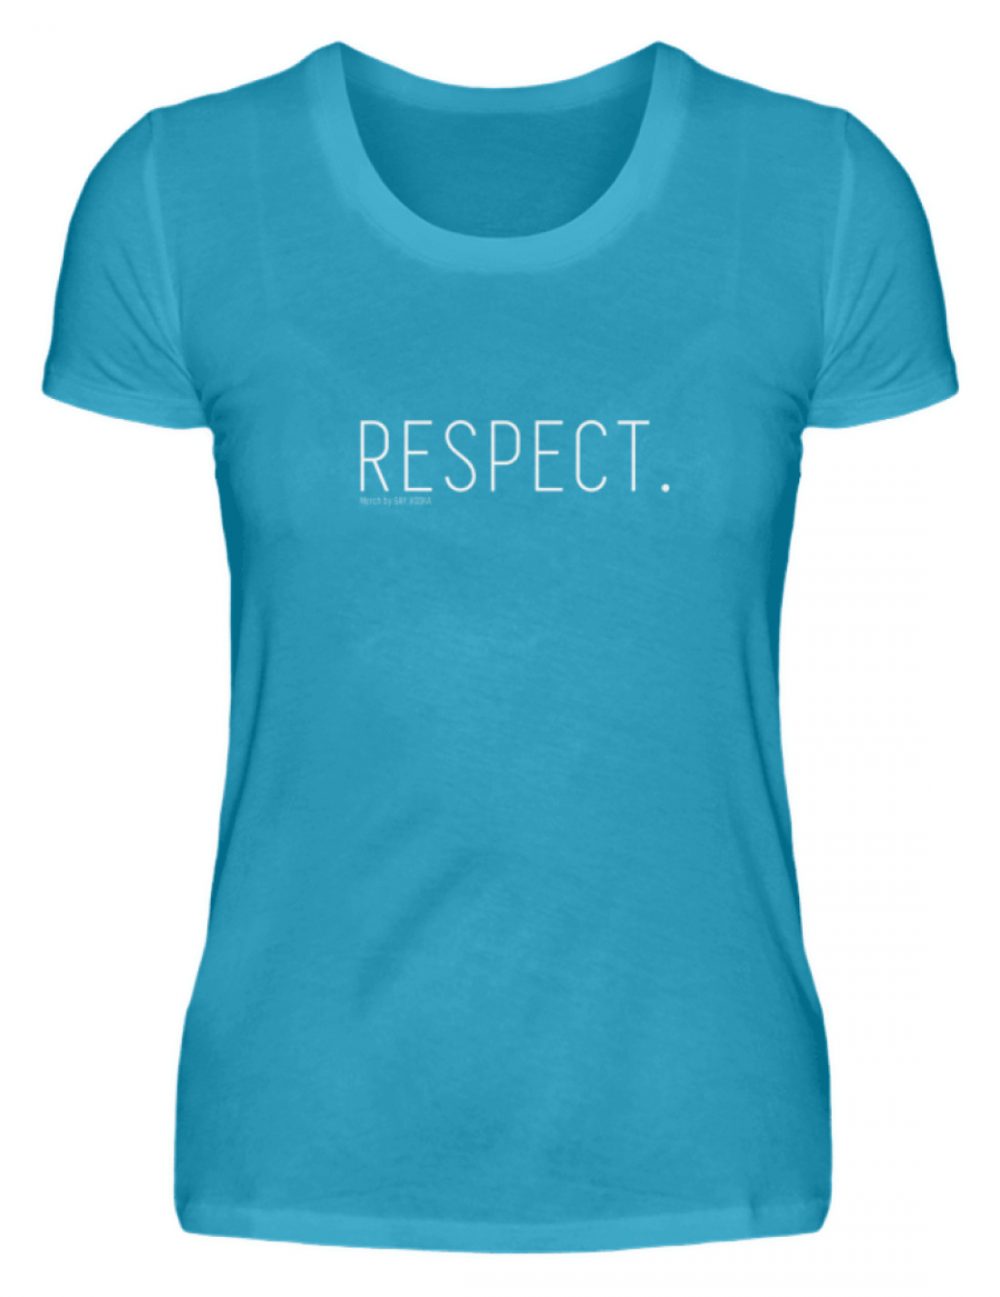 RESPECT. - Damen Premiumshirt-3175